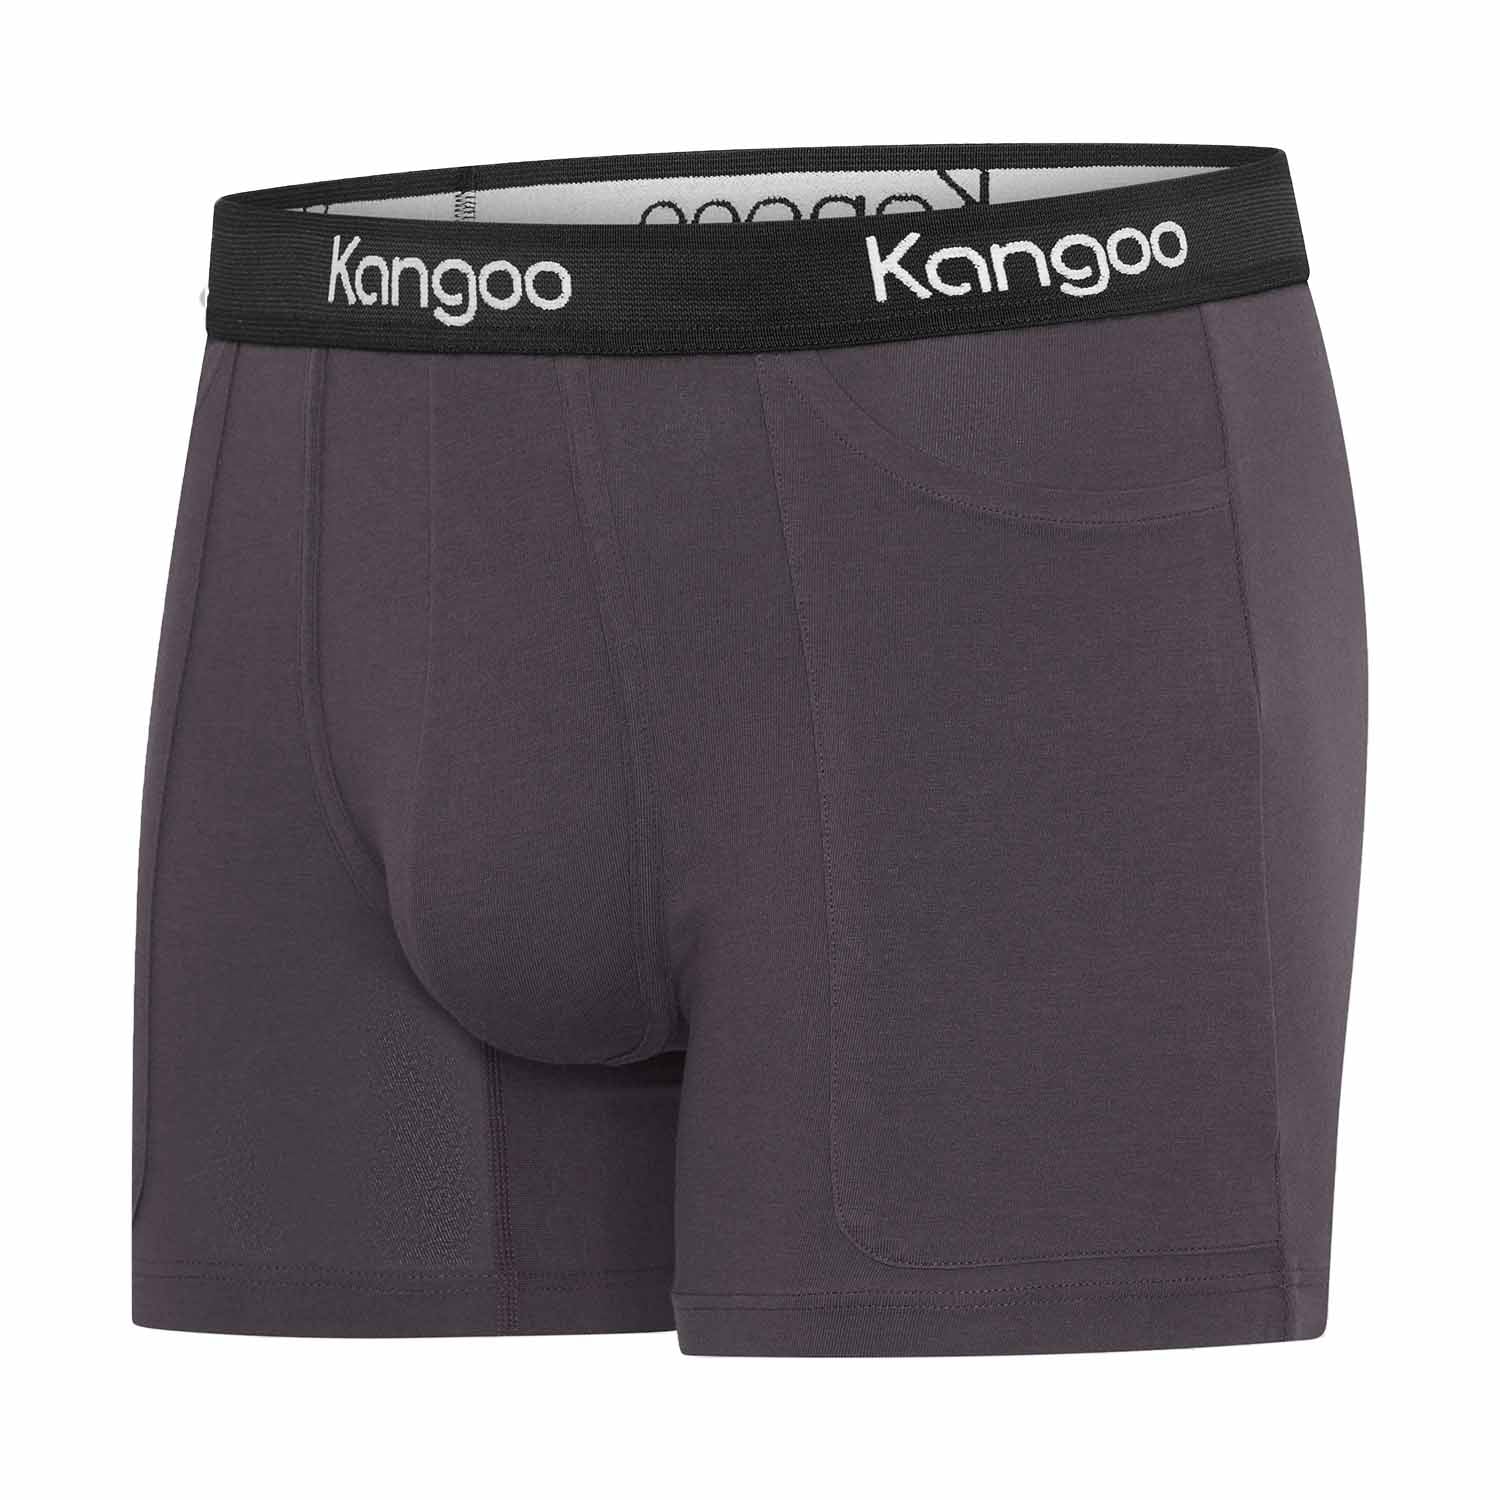 Kangoo | Grey & Black | 3-pack